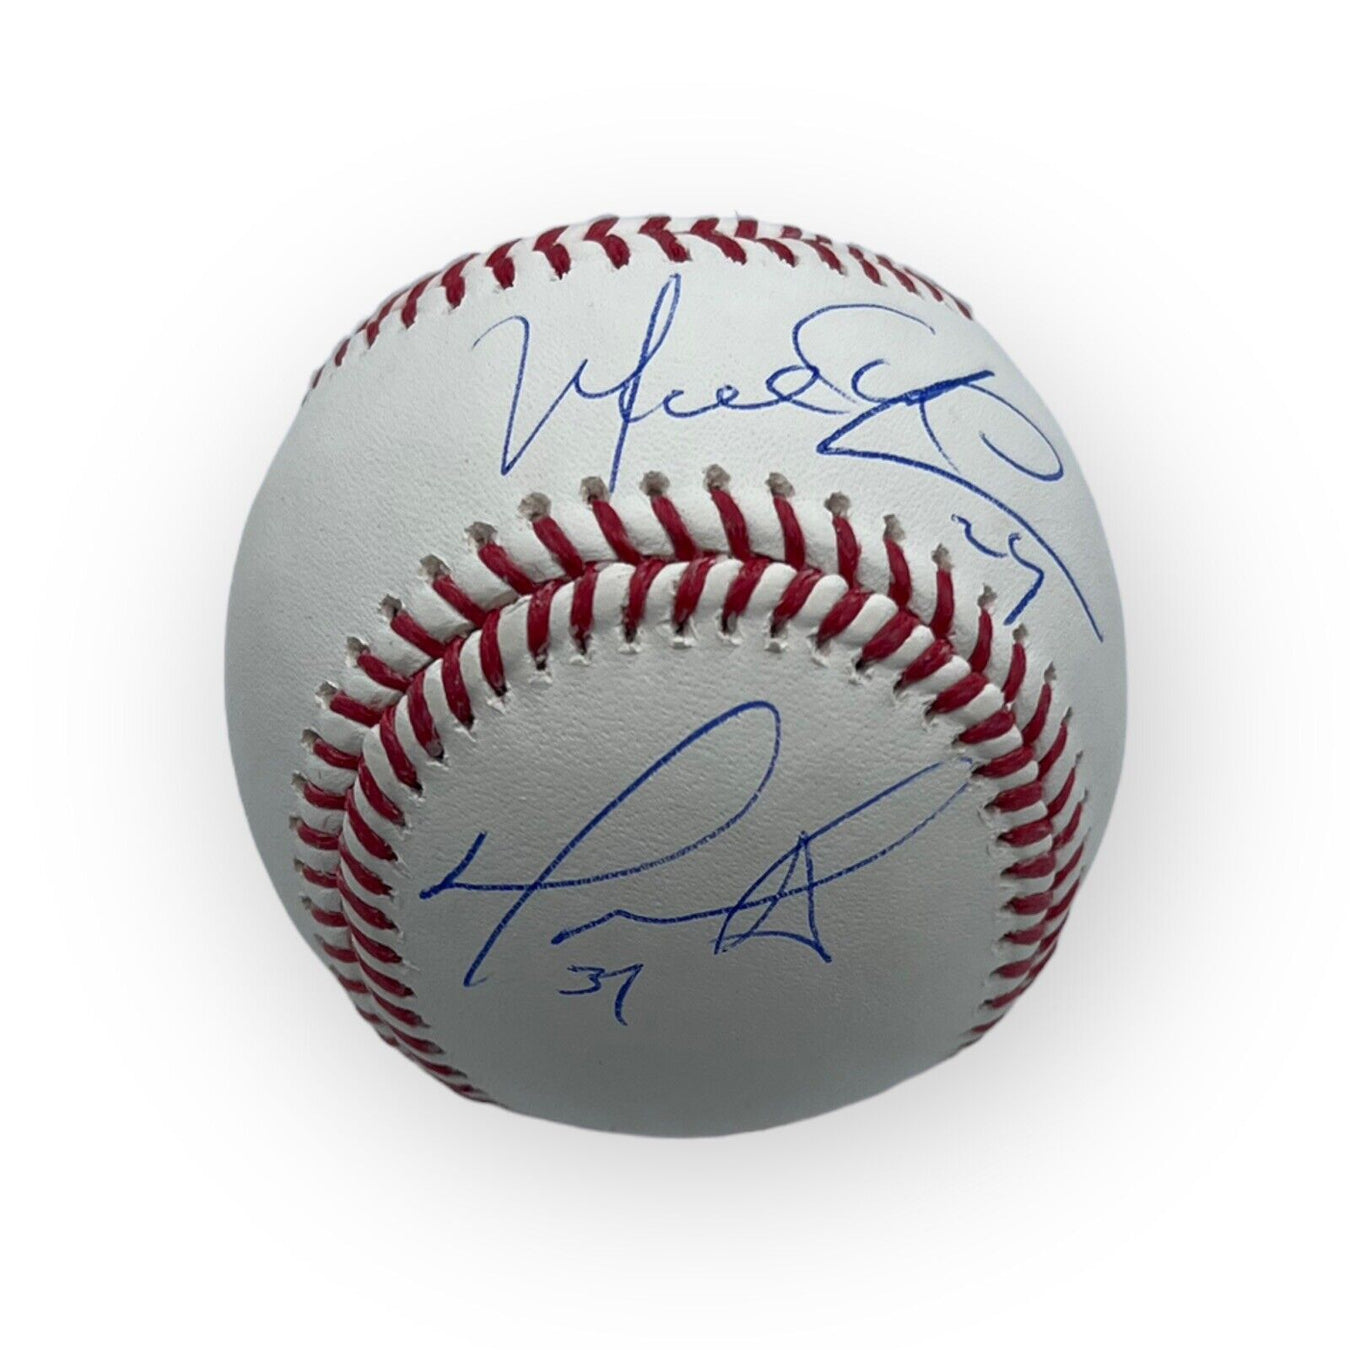 Shop Manny Ramirez Boston Red Sox Signed Official MLB Baseball 04 WS MVP